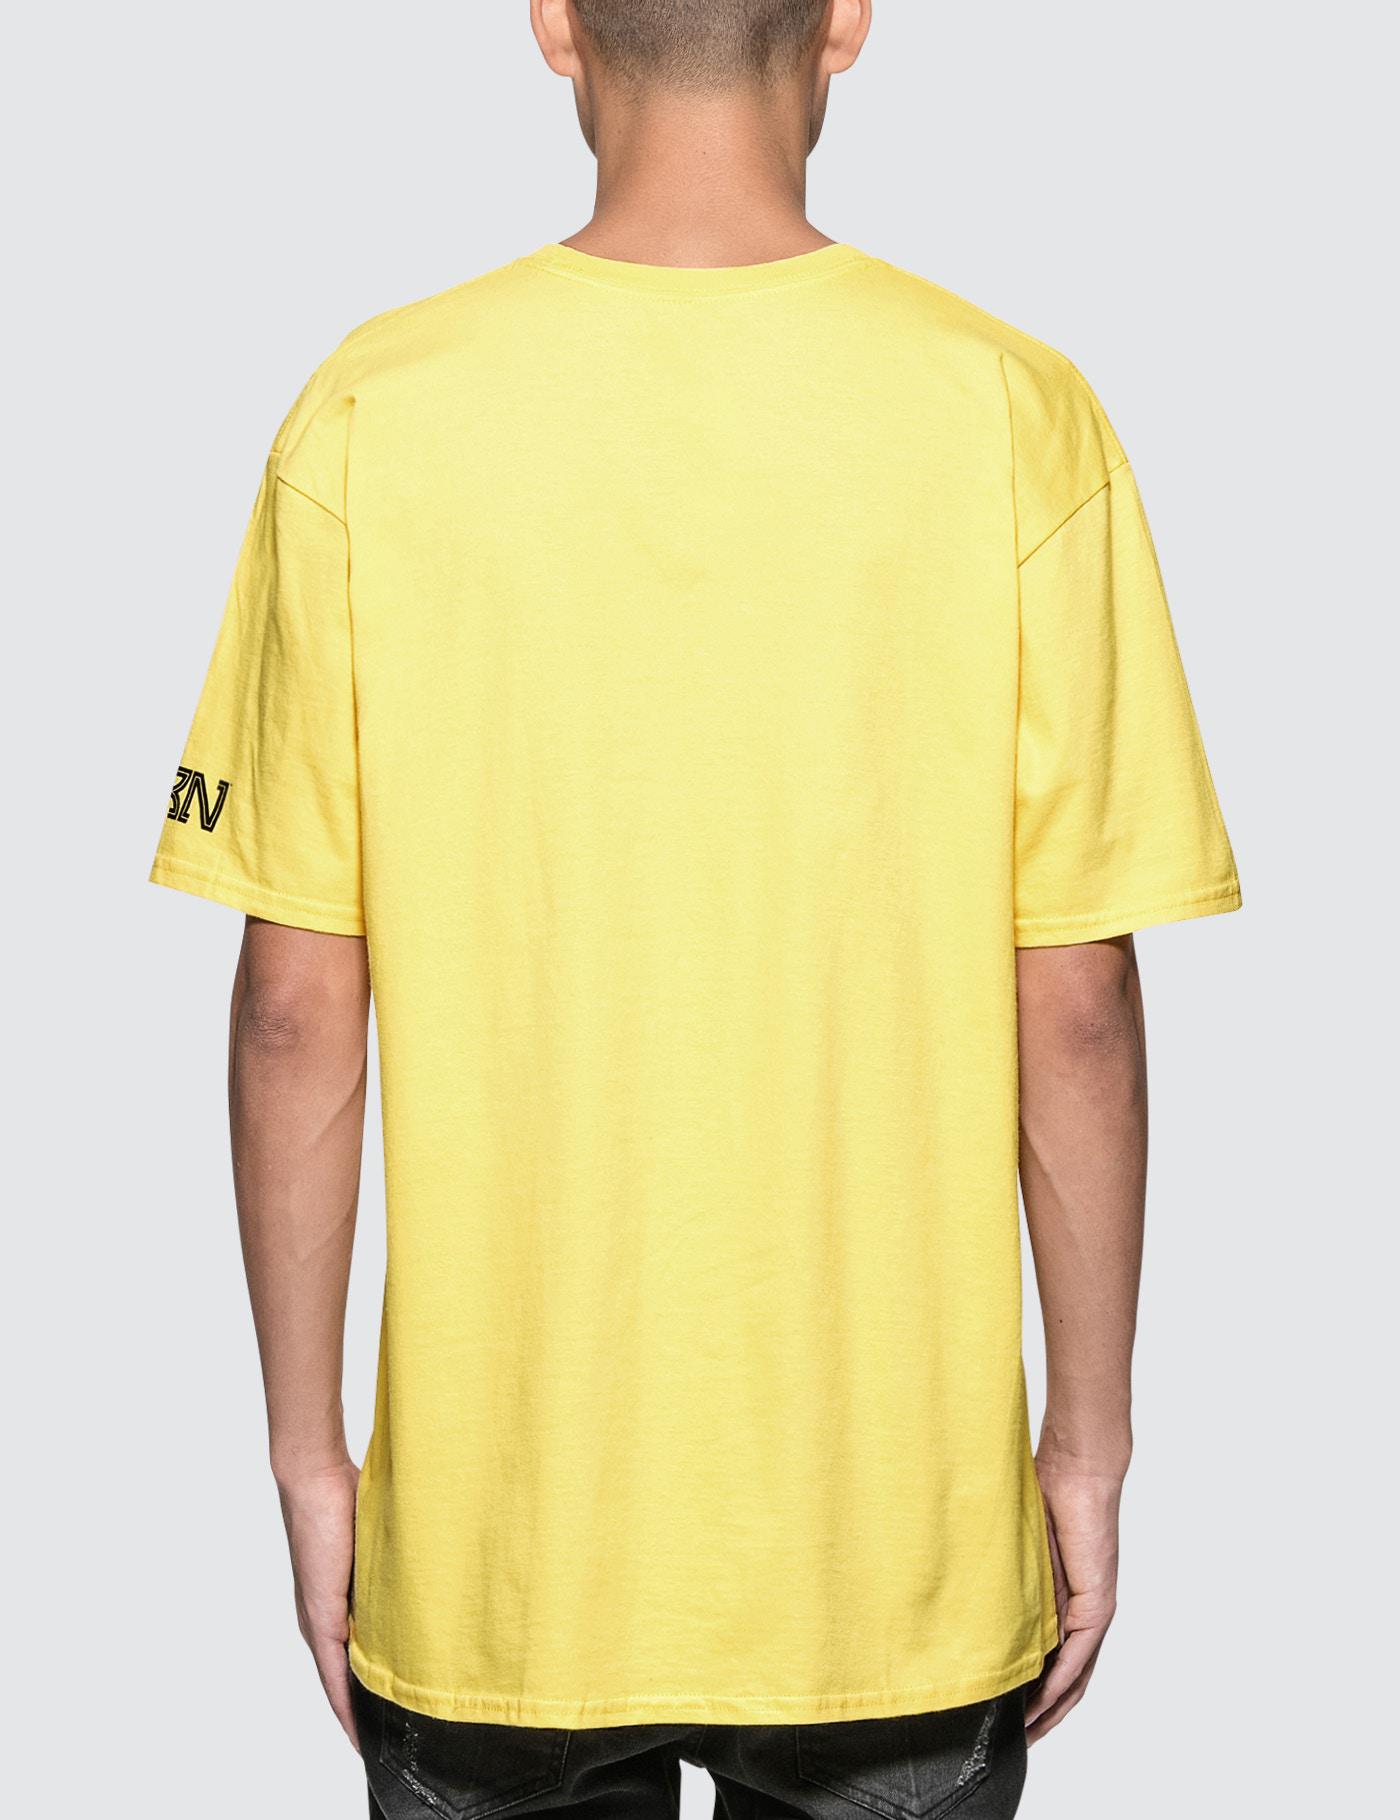 Lyst - Yrn Slippery S/s T-shirt in Yellow for Men